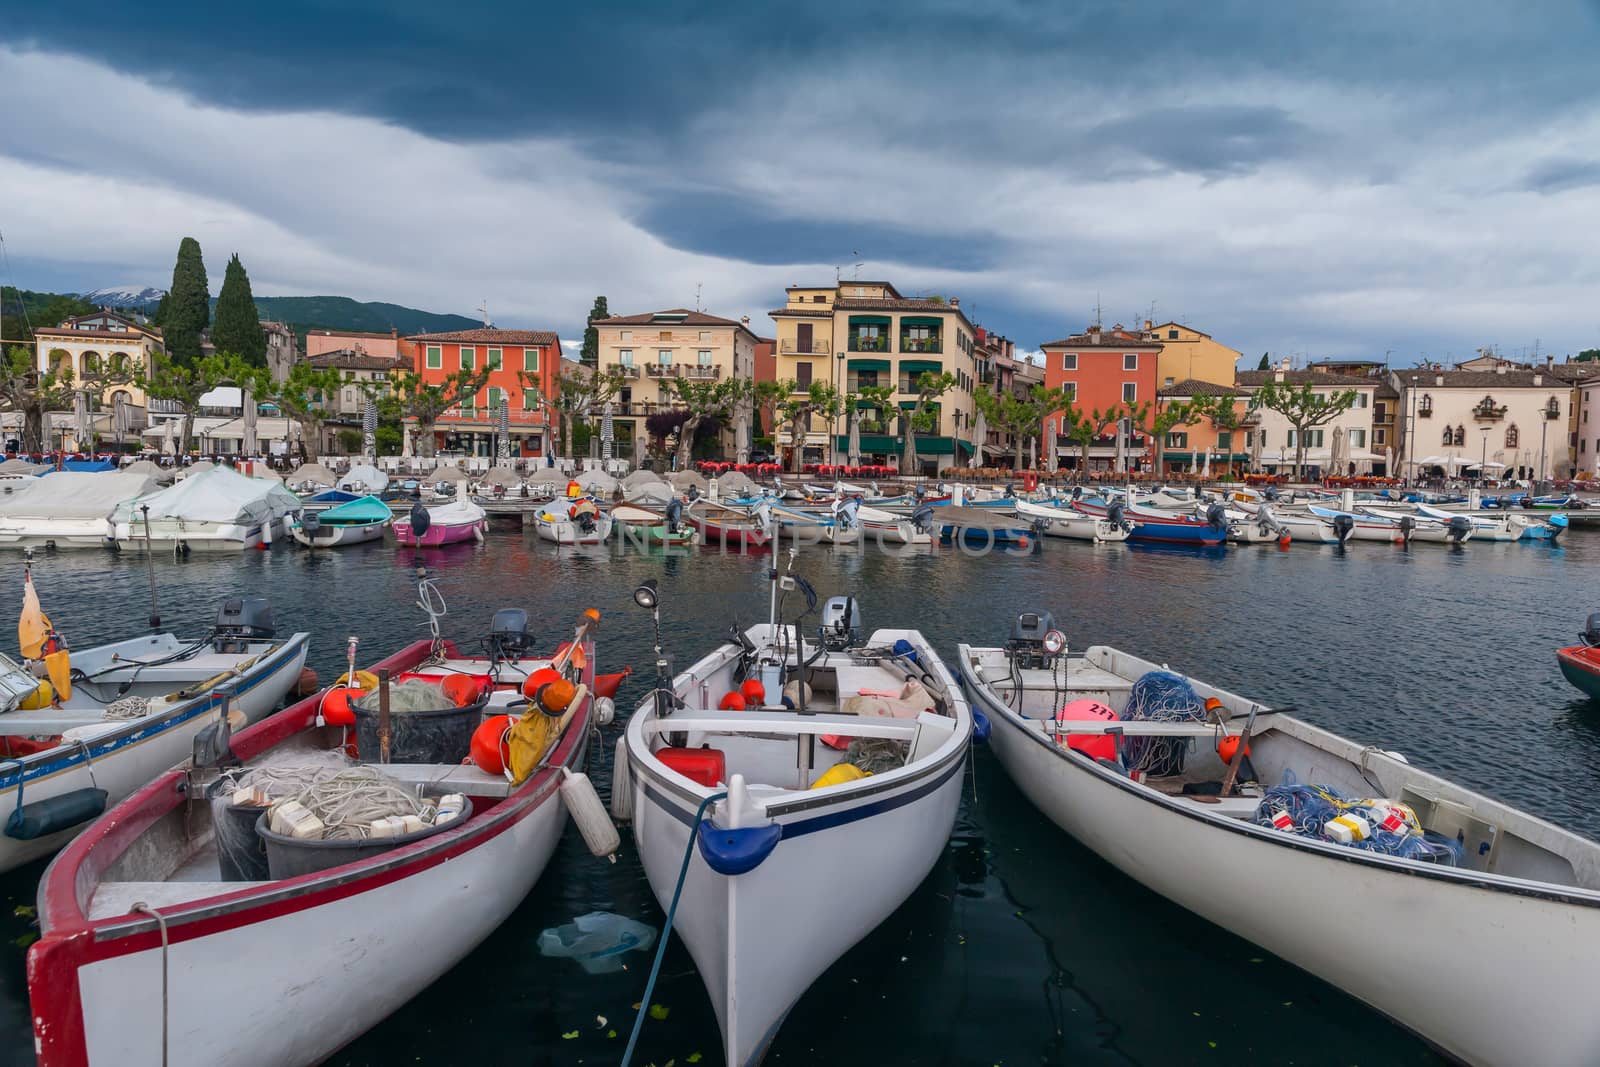 boats in the harbor, Lake Garda, Italy